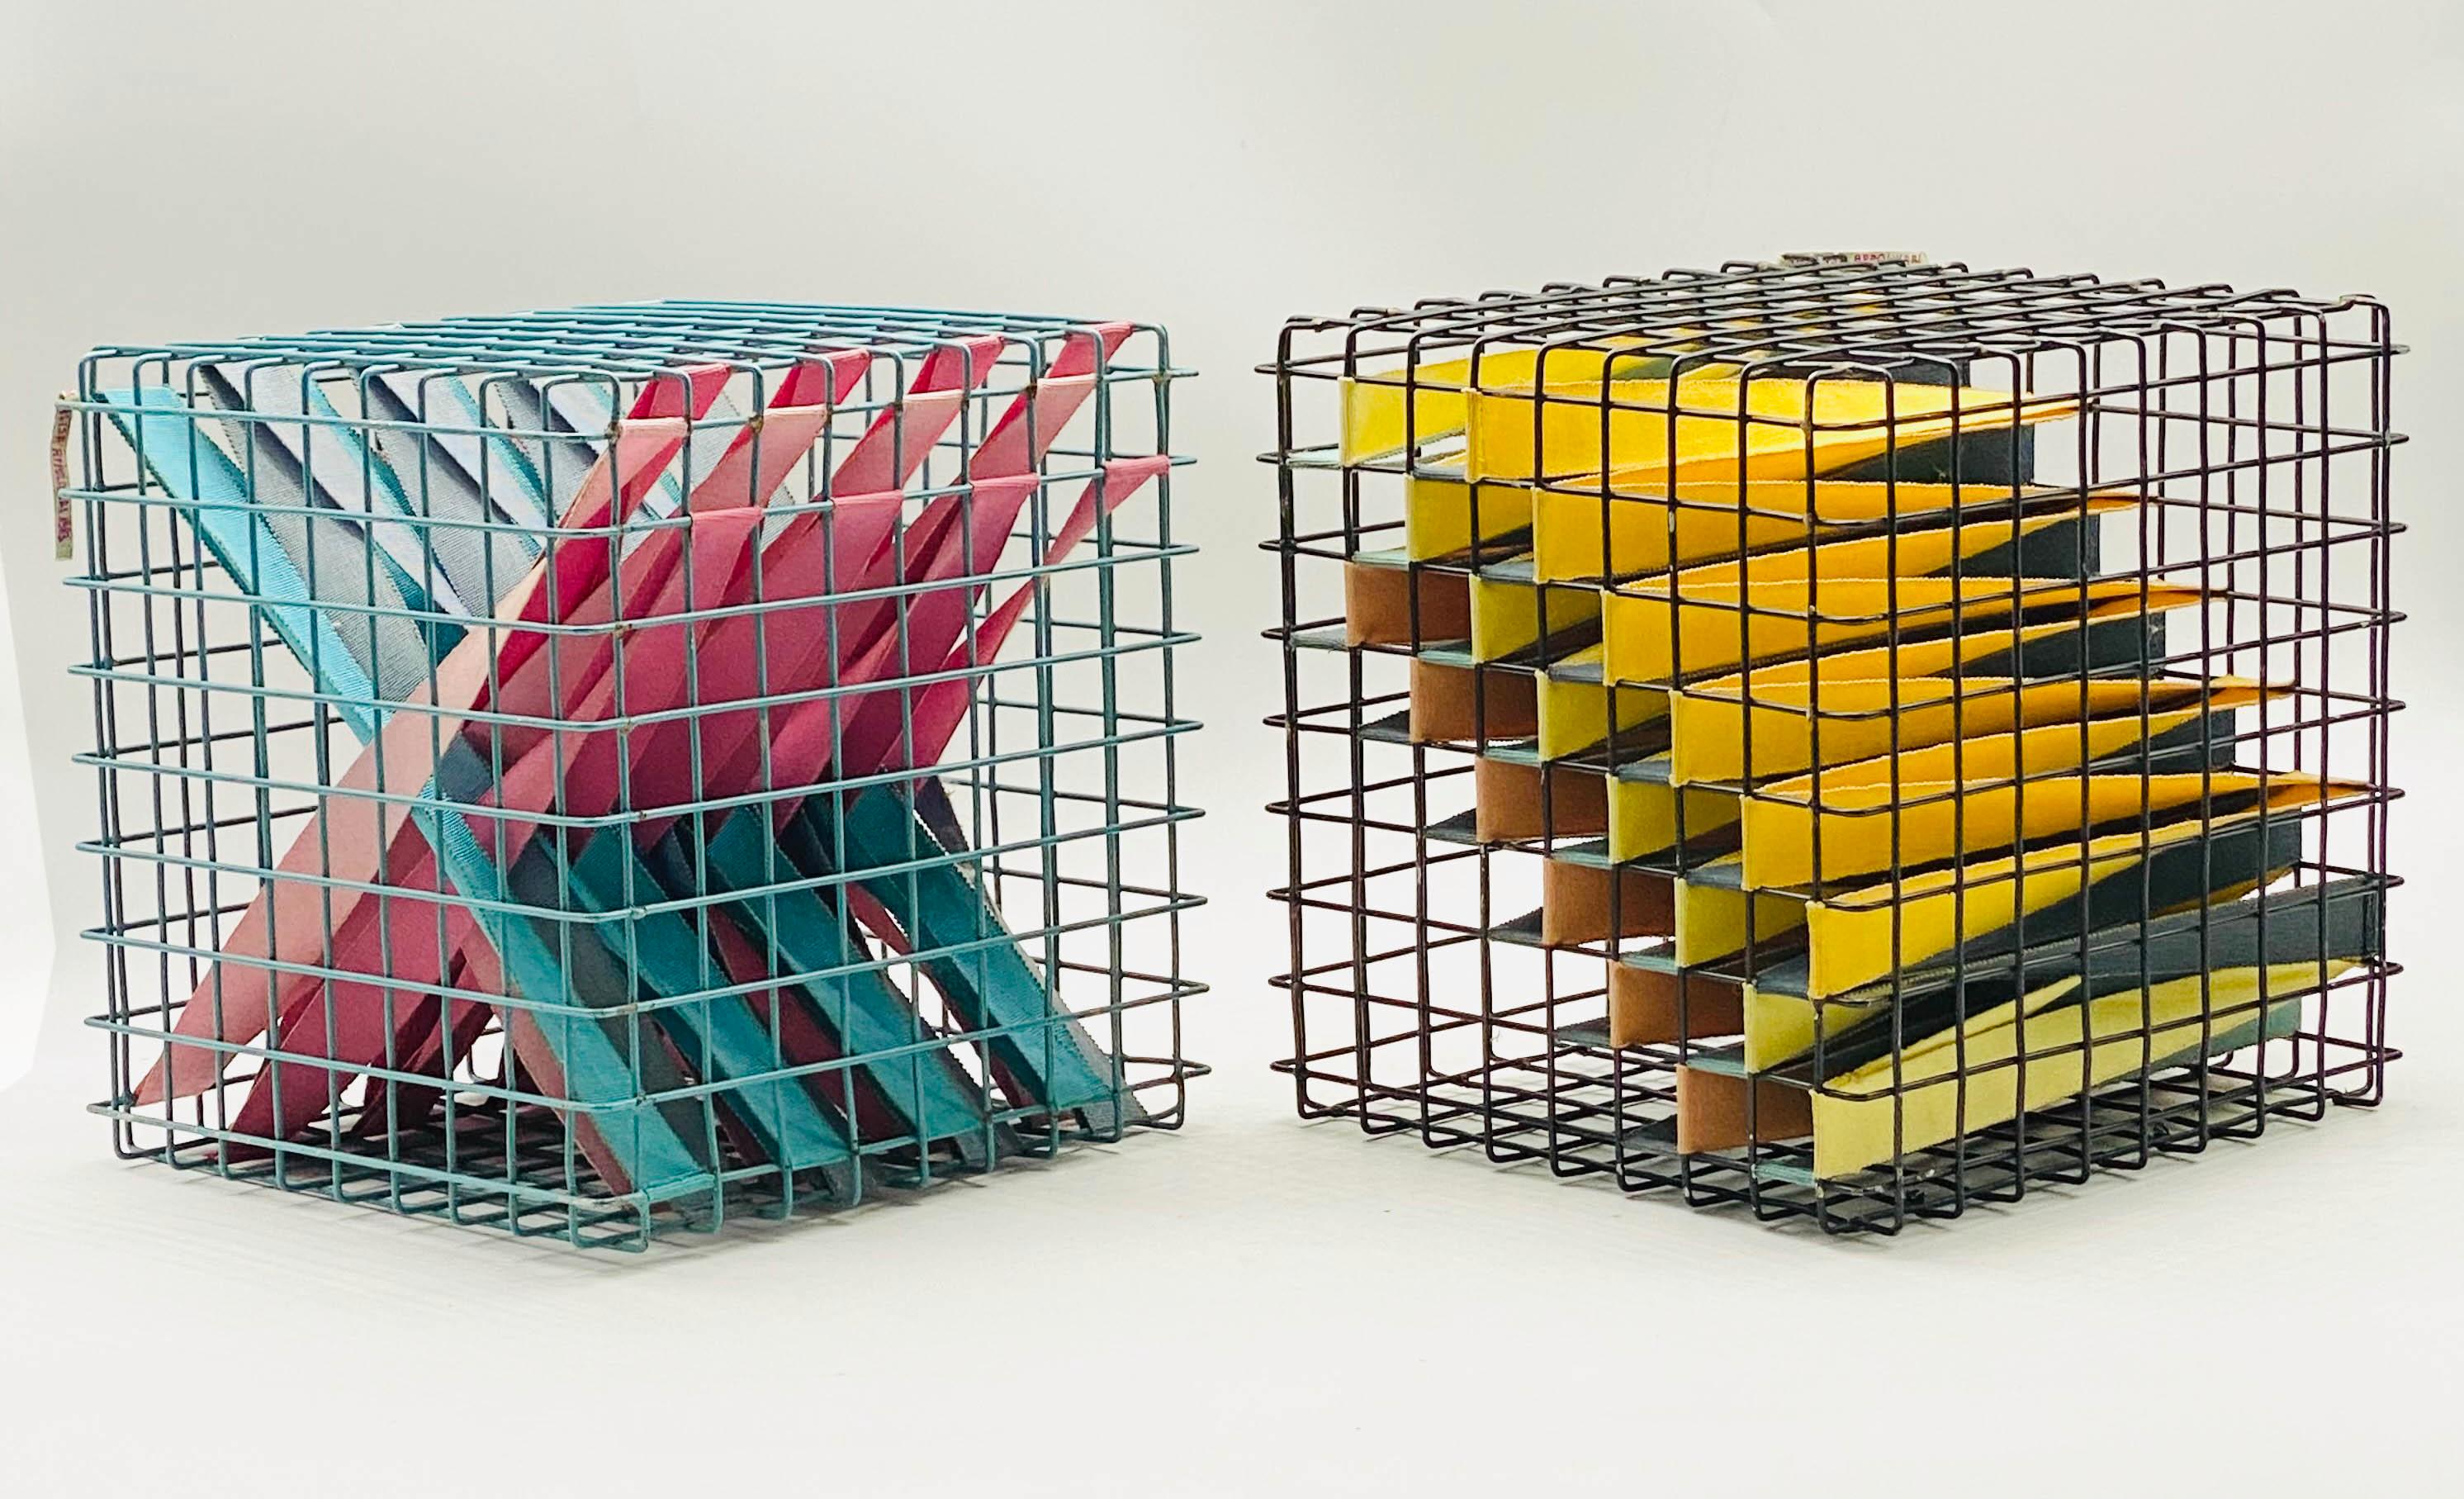 Modernist cube sculpture by Annalisa Appolinari, in metal and colored fabric ribbon. Label Annalisa Appolinari '83.